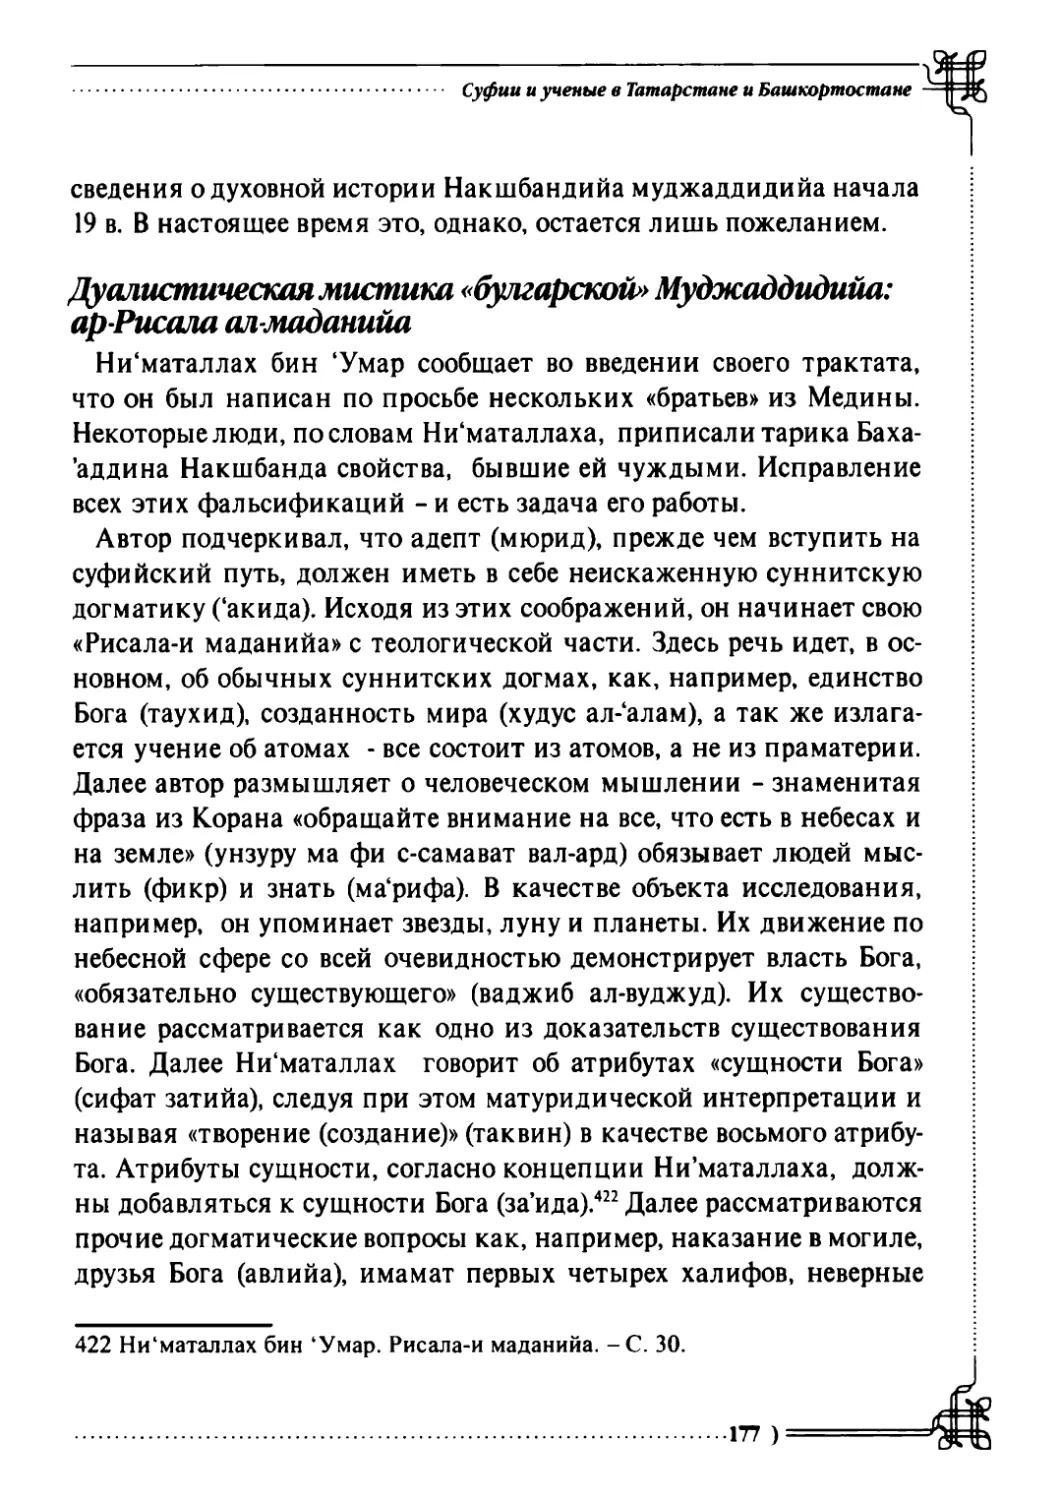 Дуалистическая мистика «булгарской» Муджаддидийа: ар-Рисала ал-маданийа 177